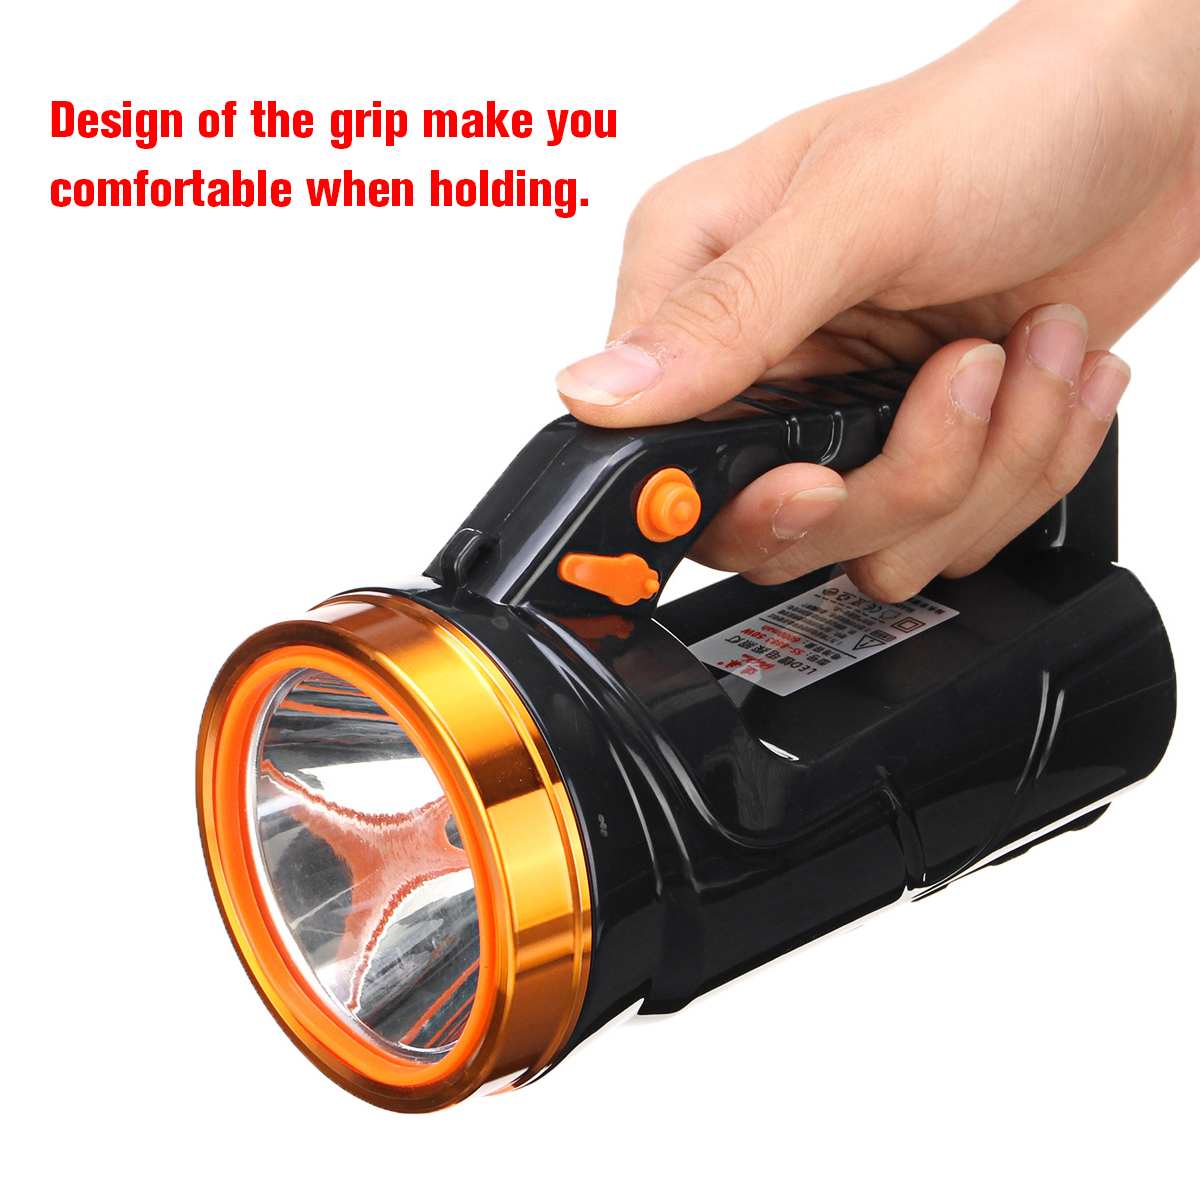 50W Handheld Super Bright LED Spotlight Portable Spotlights Flashlight Lithum Battery Strong Light Searchlight for Expeditions